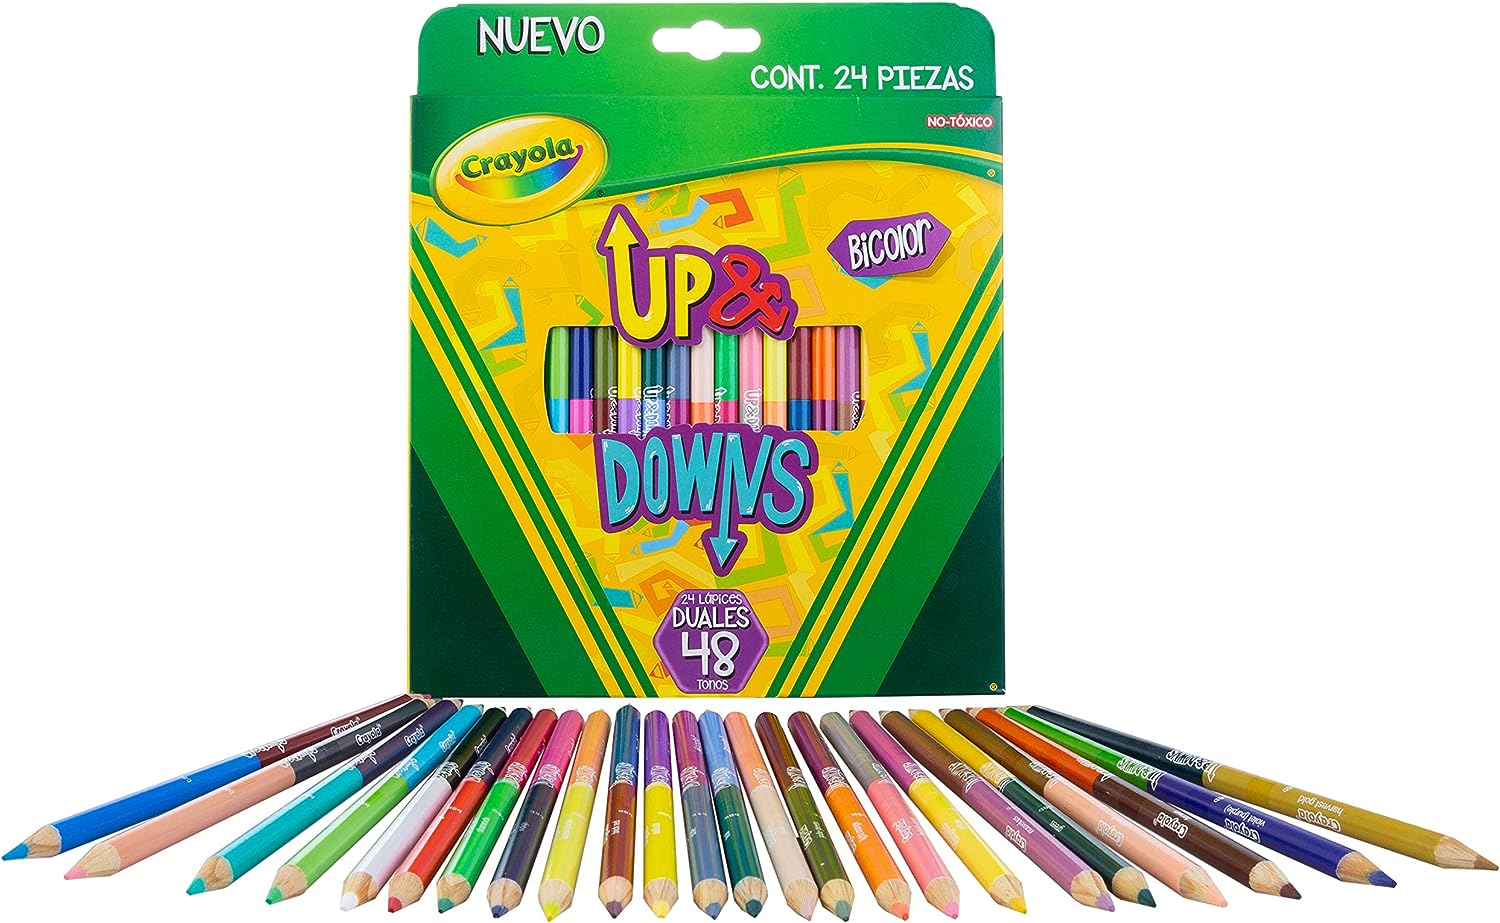 24 Lapices Color Doble Punta 48 Tonos Up & Downs Crayola